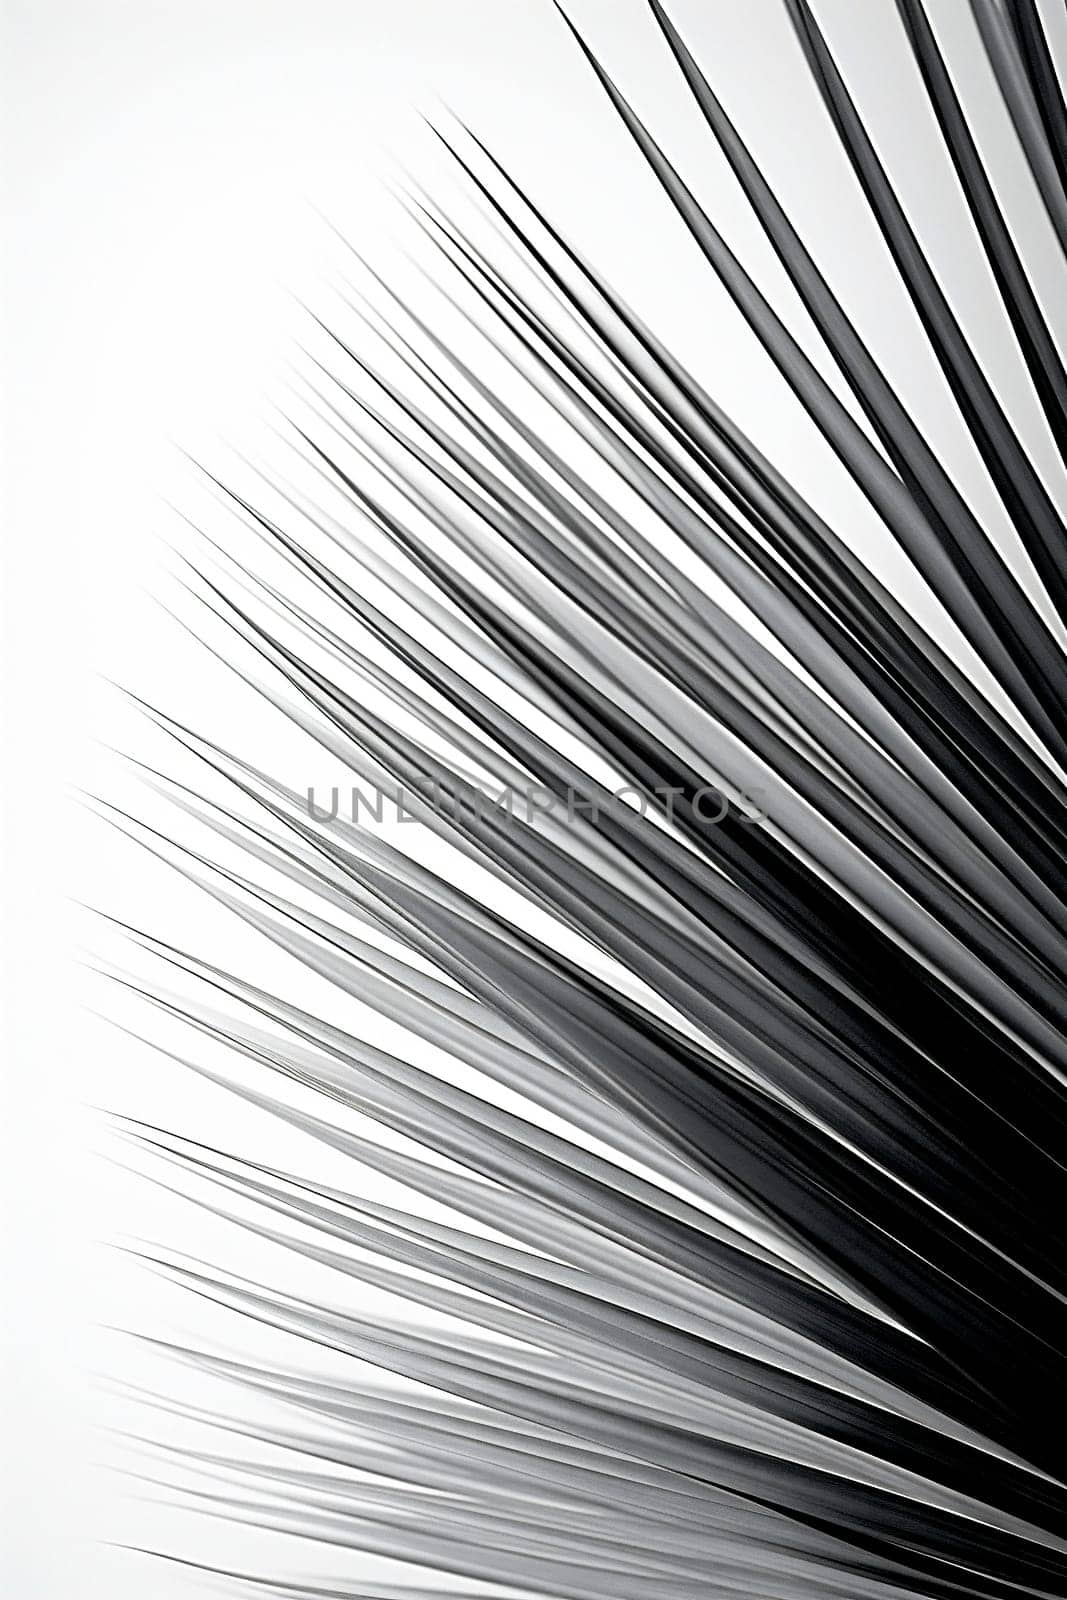 Modern wallpaper monochrome white design black lines textured creative light art background graphic geometric stripe abstract pattern shape decorative element backdrop illustration